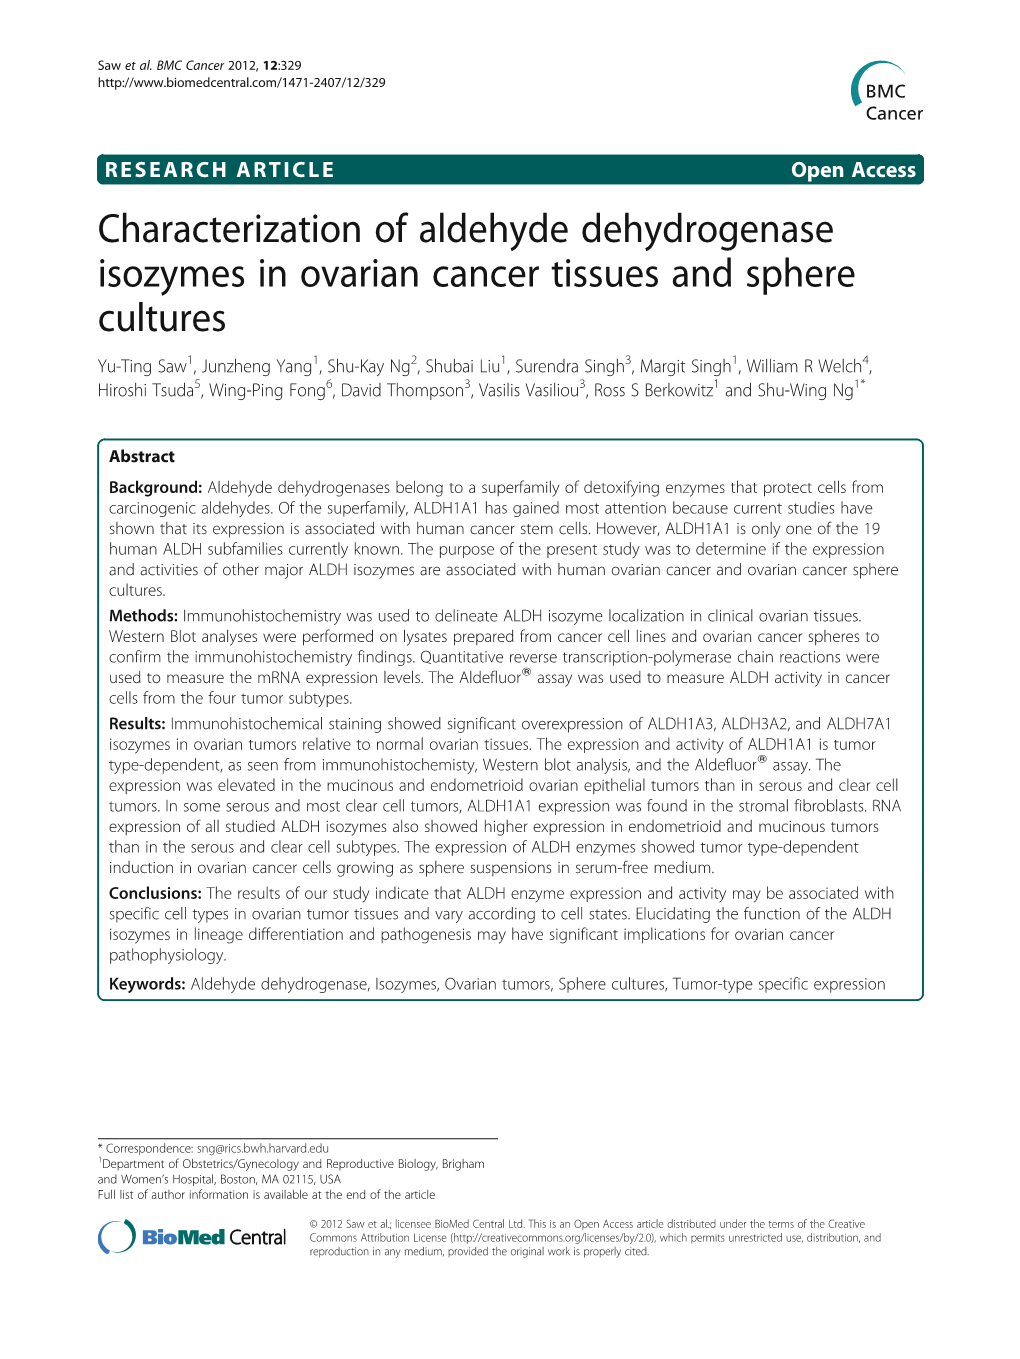 Characterization of Aldehyde Dehydrogenase Isozymes In